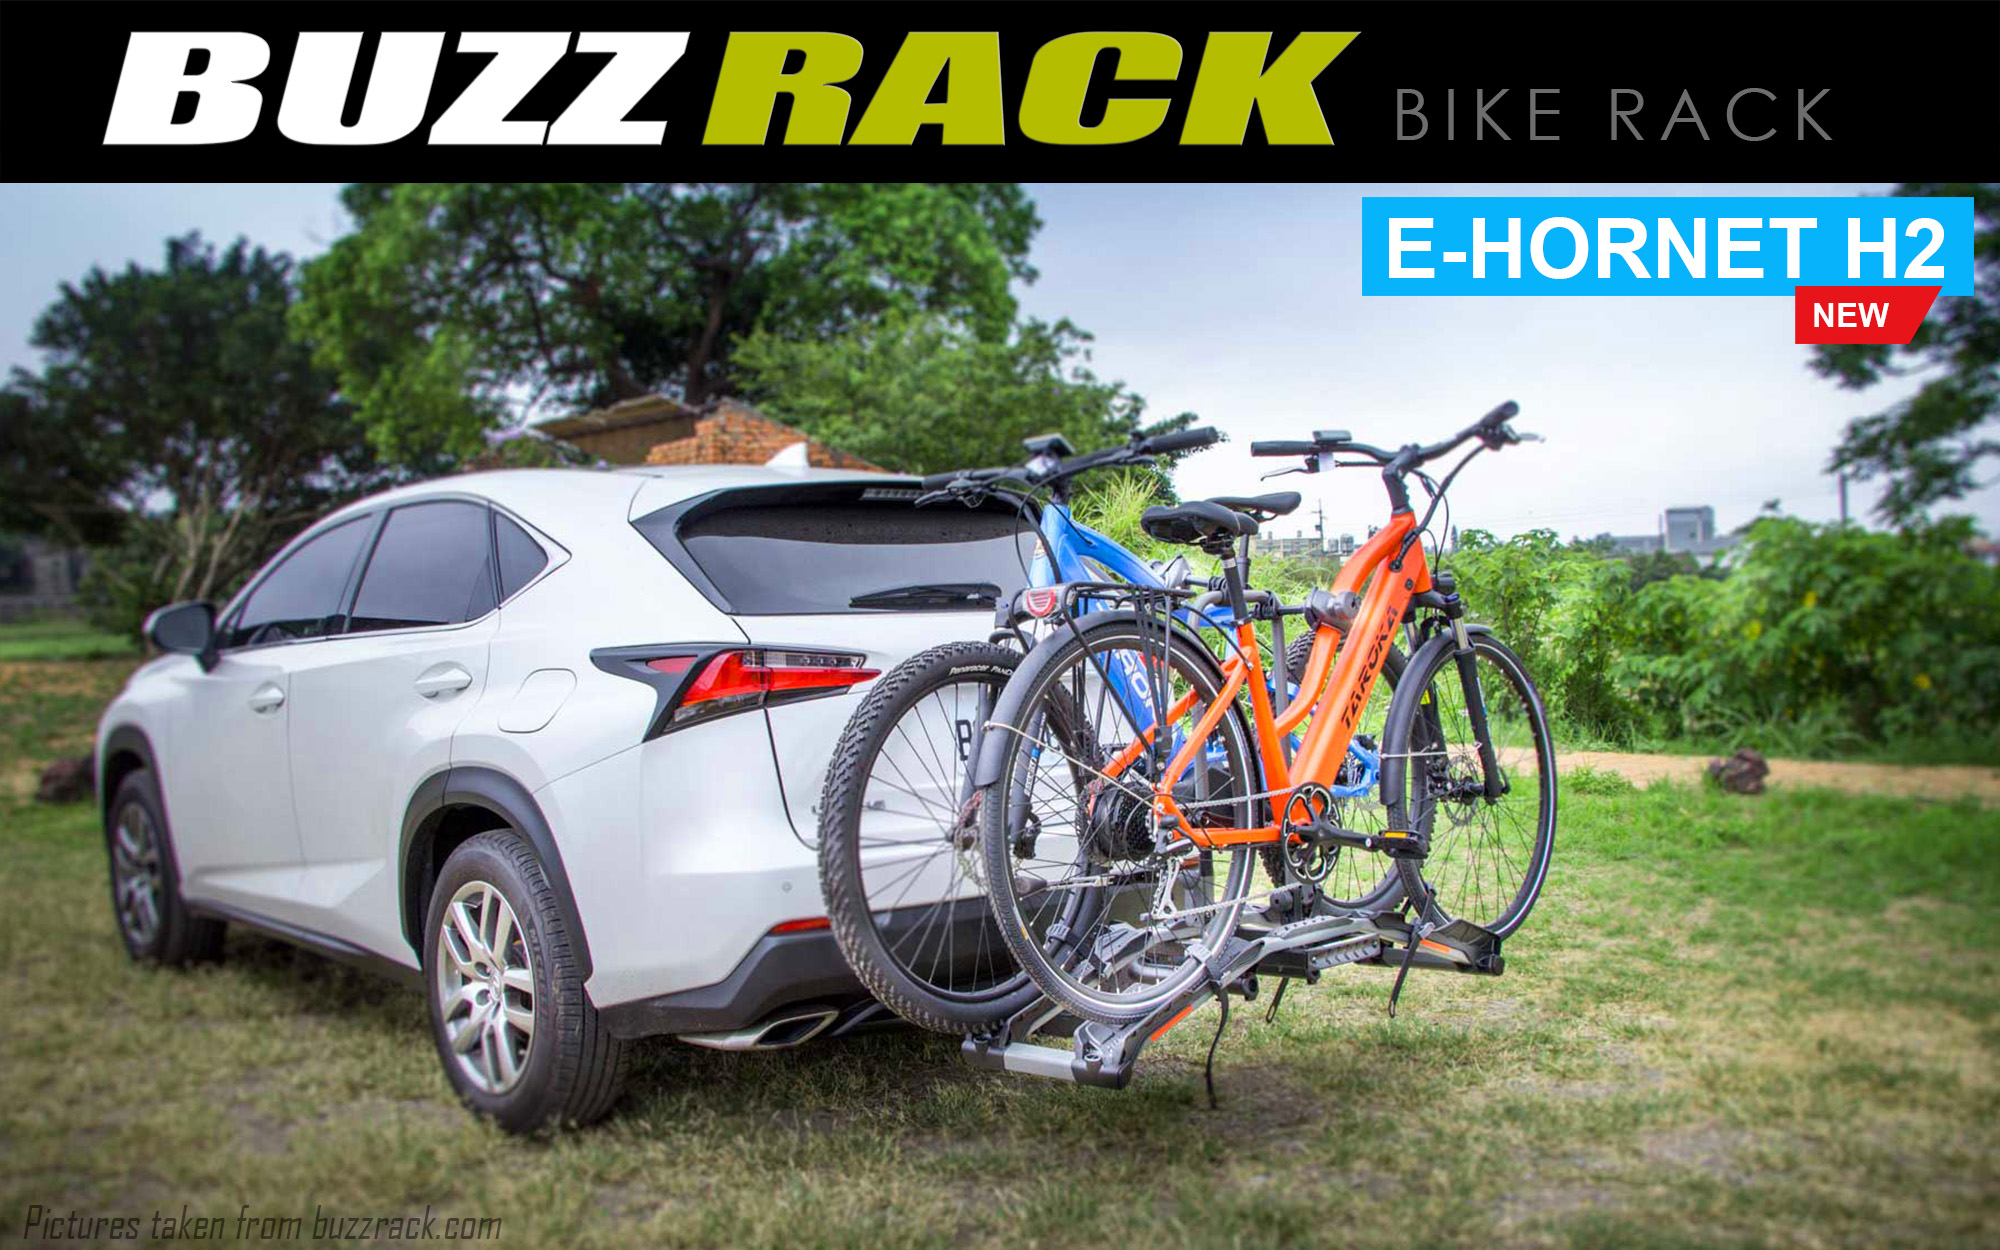 Genuine Buzzrack Bike Rack Hormet H2 Bike Carrier Compact Tow Hitch Mount  Platform towhitch mount bike carrier Lazada PH